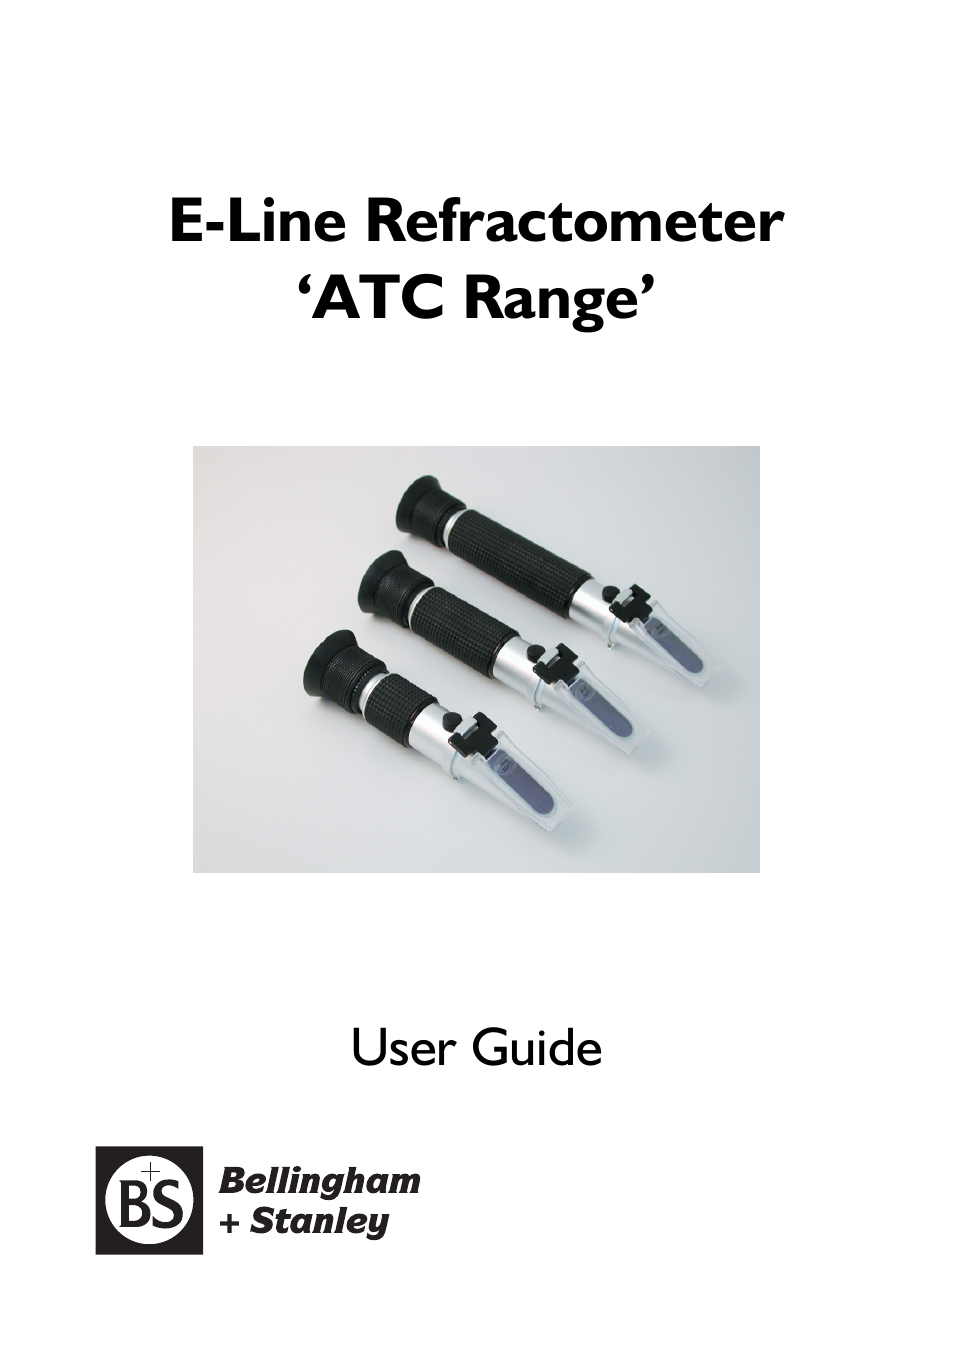 E-Line Refractometer ATC Range